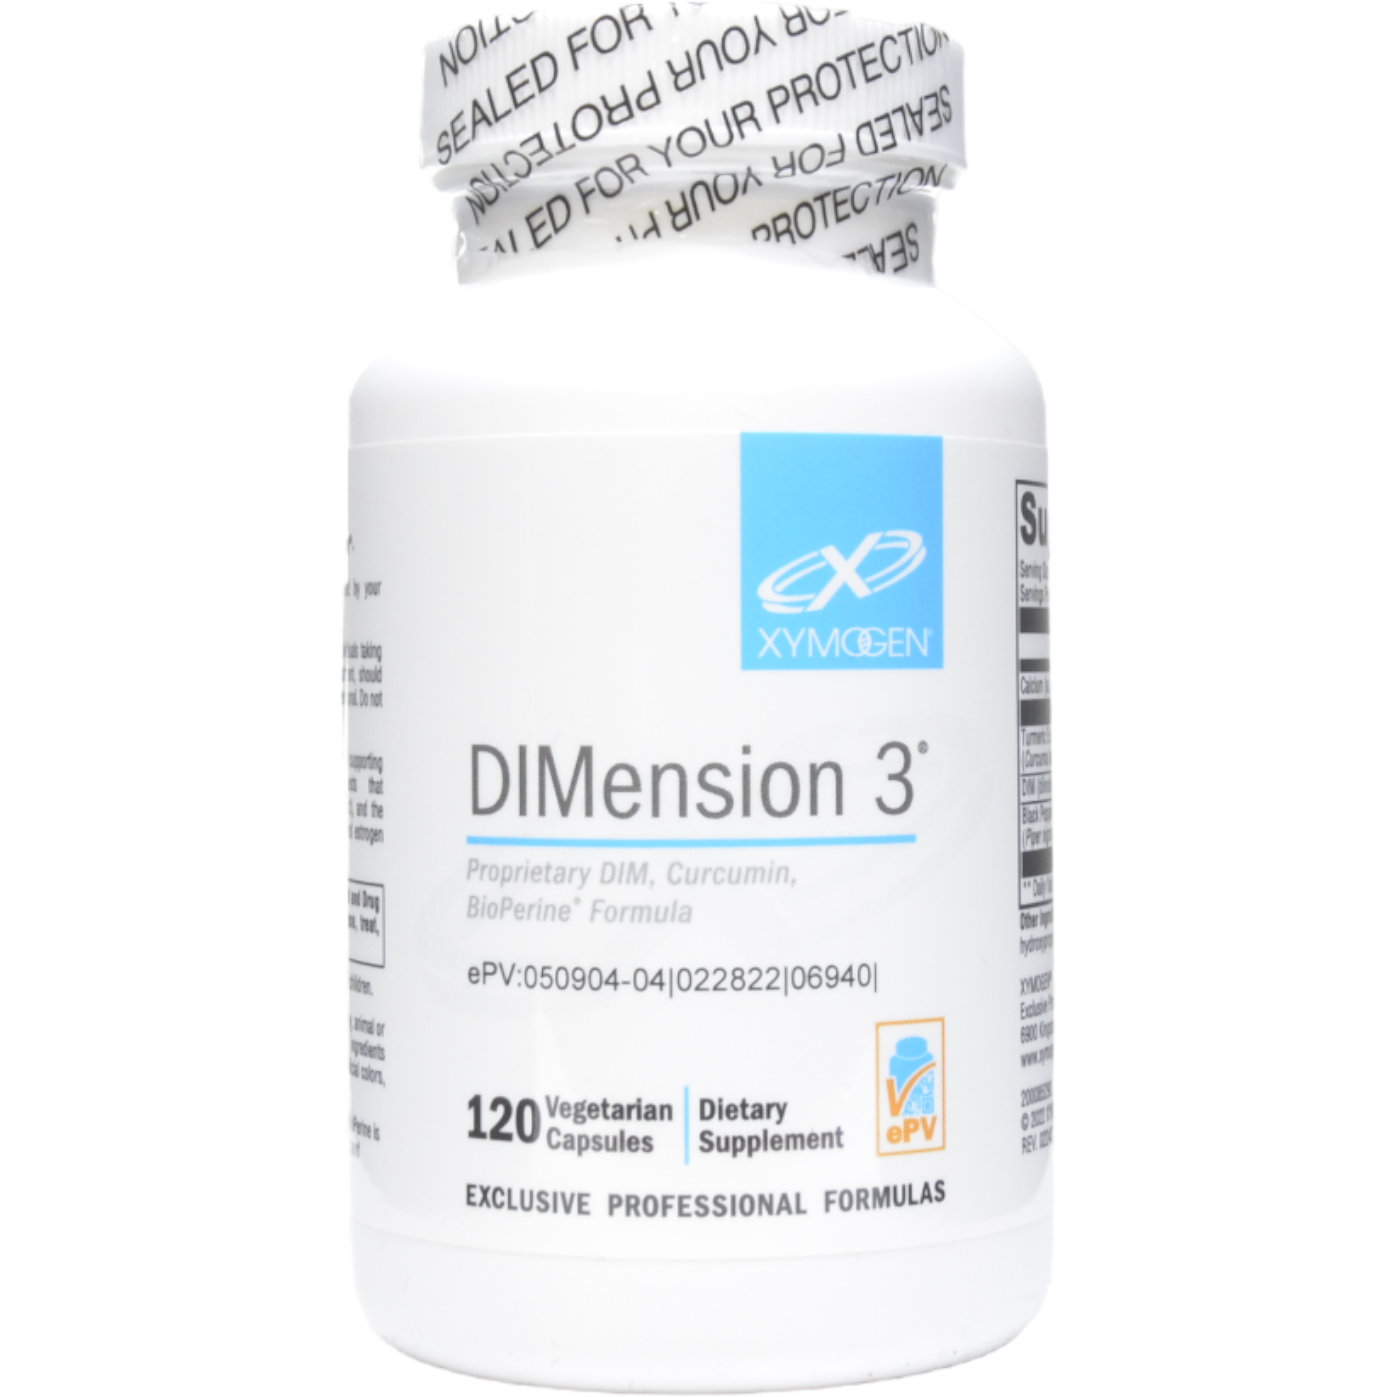 Xymogen DIMension 3 - ePothex